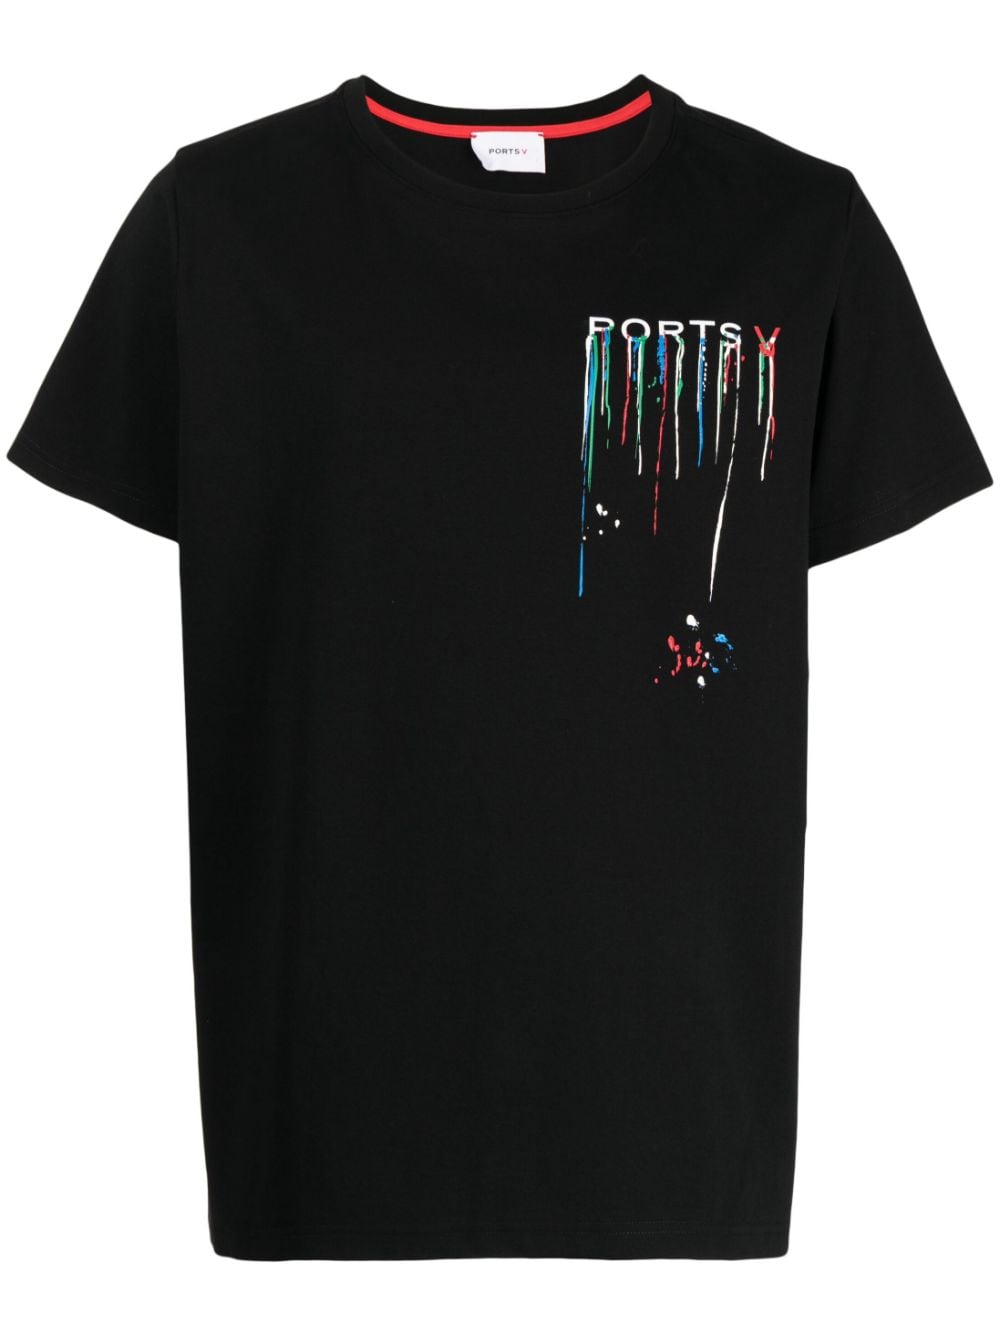 Ports V T-Shirt mit Farbklecks-Print - Schwarz von Ports V